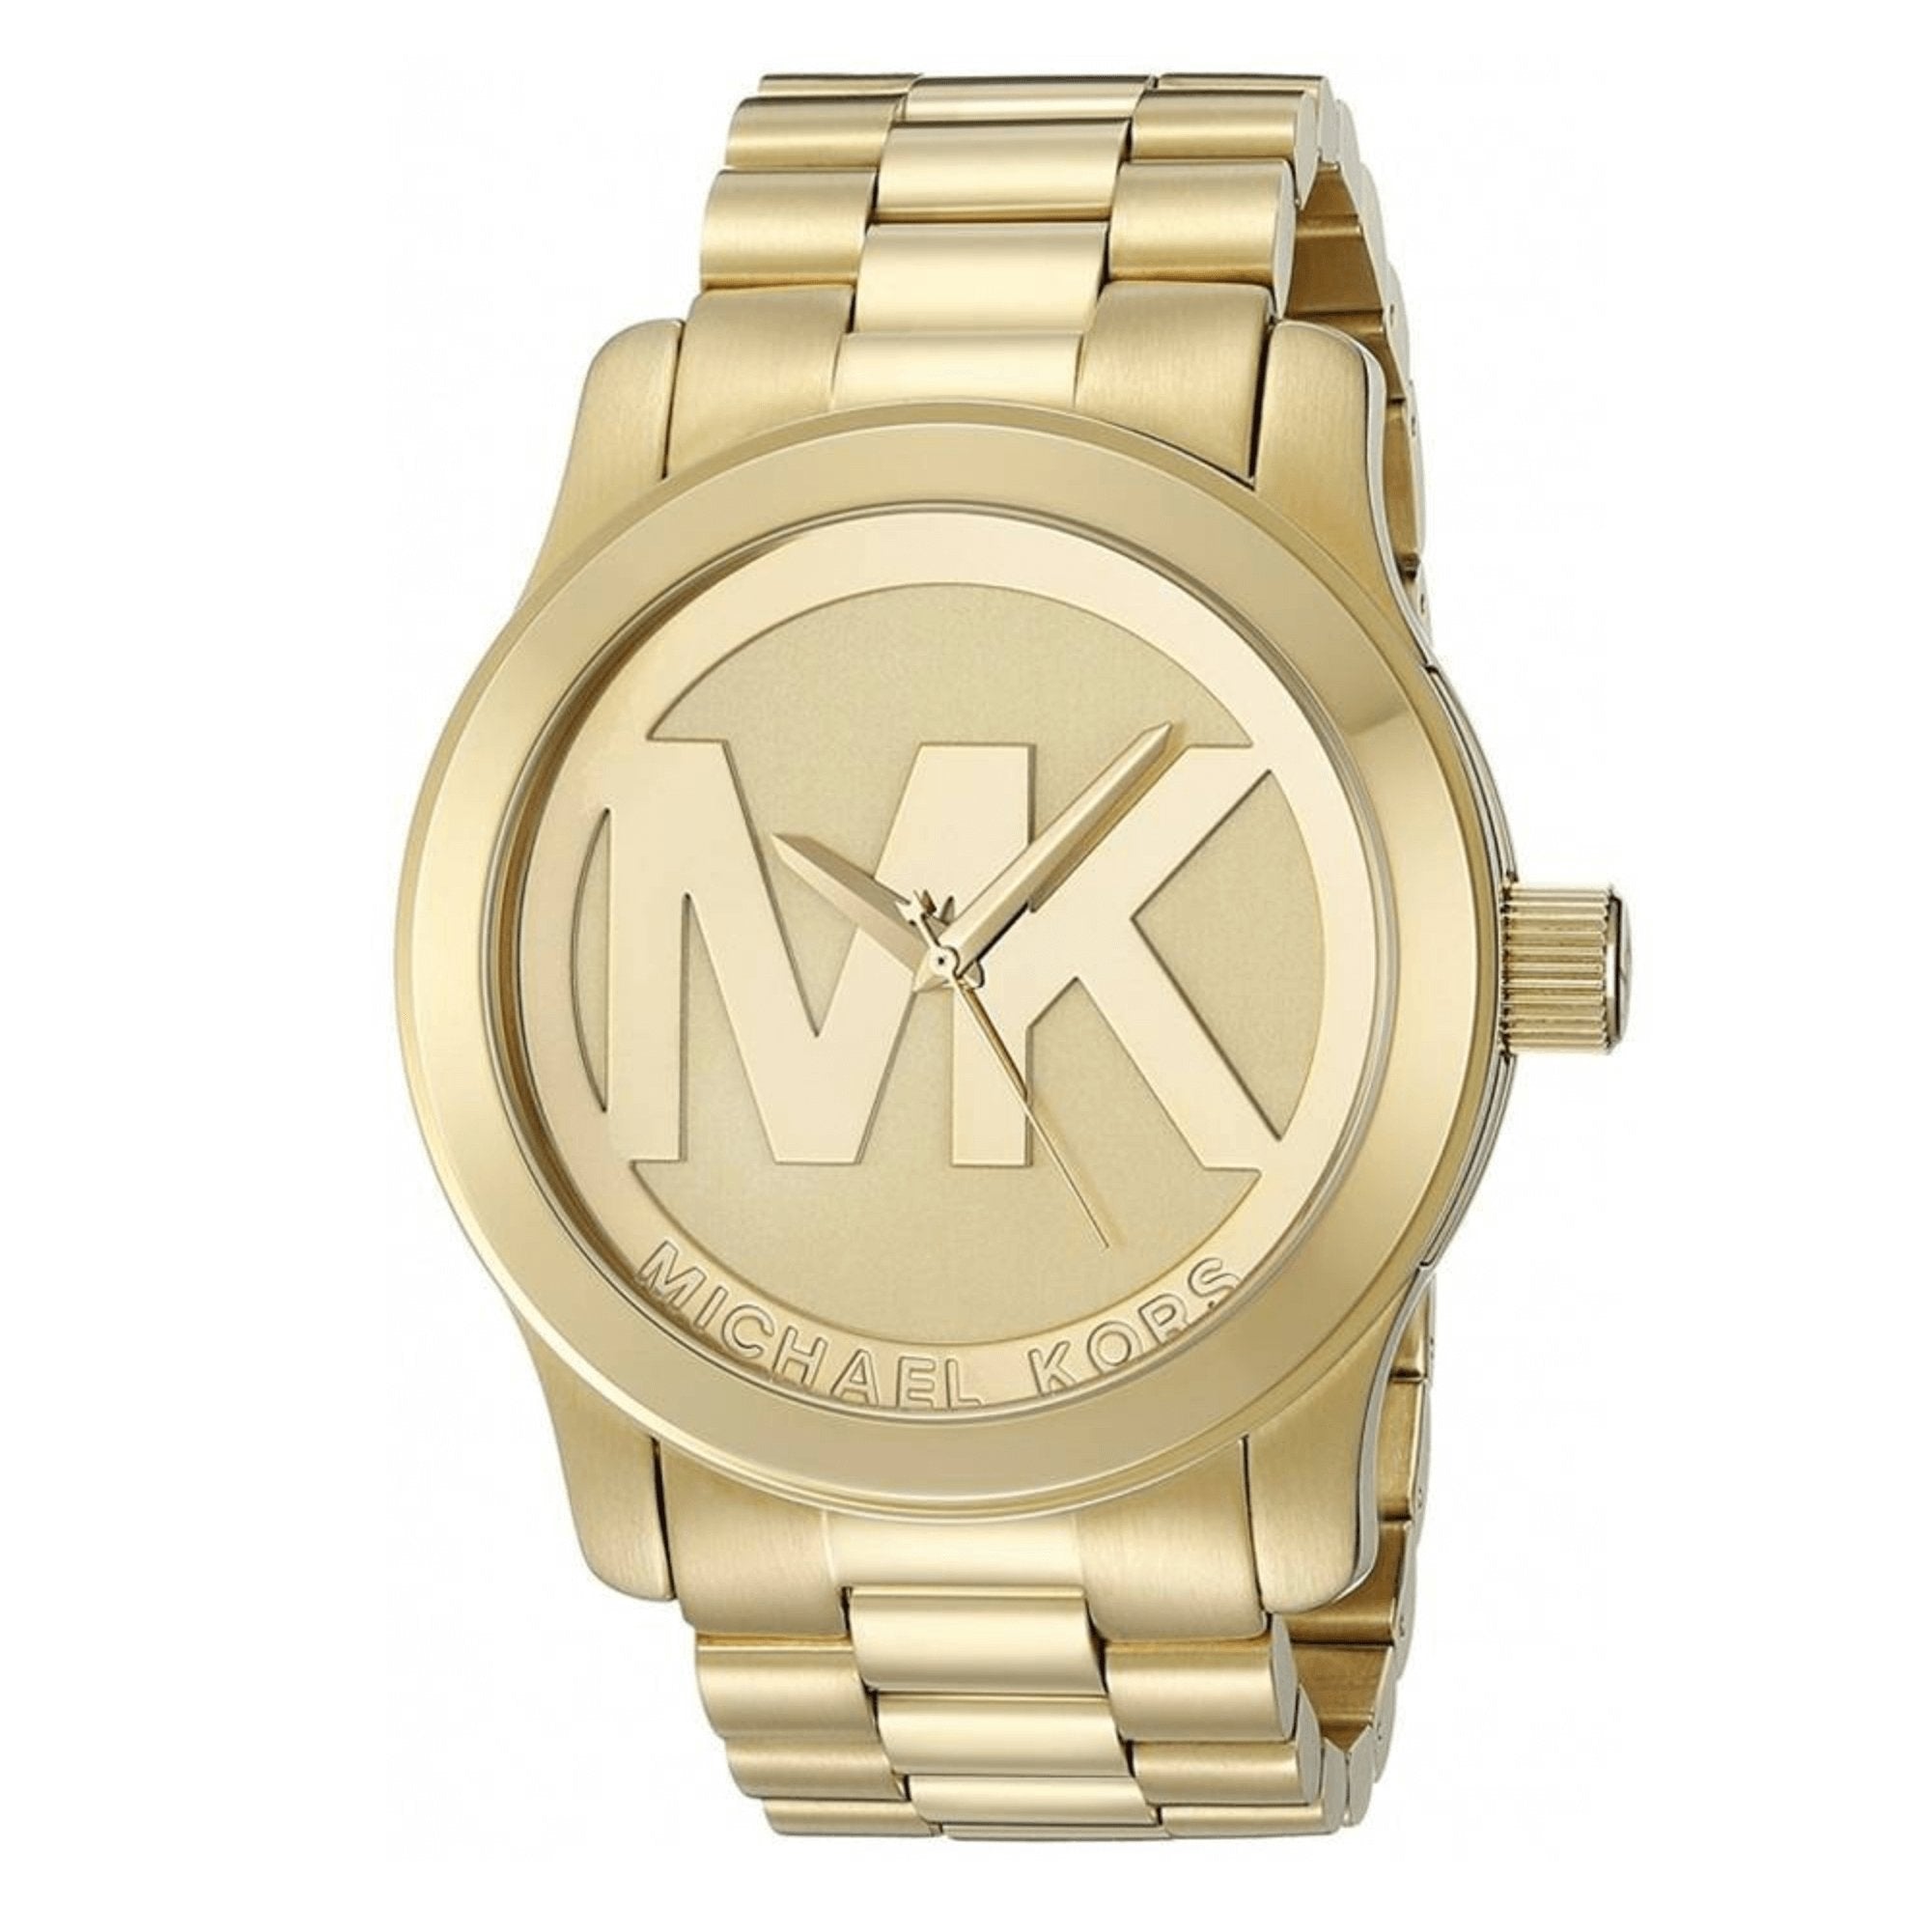 Michael Kors Ladies Watch Runway Yellow Gold MK5473 - Watches & Crystals